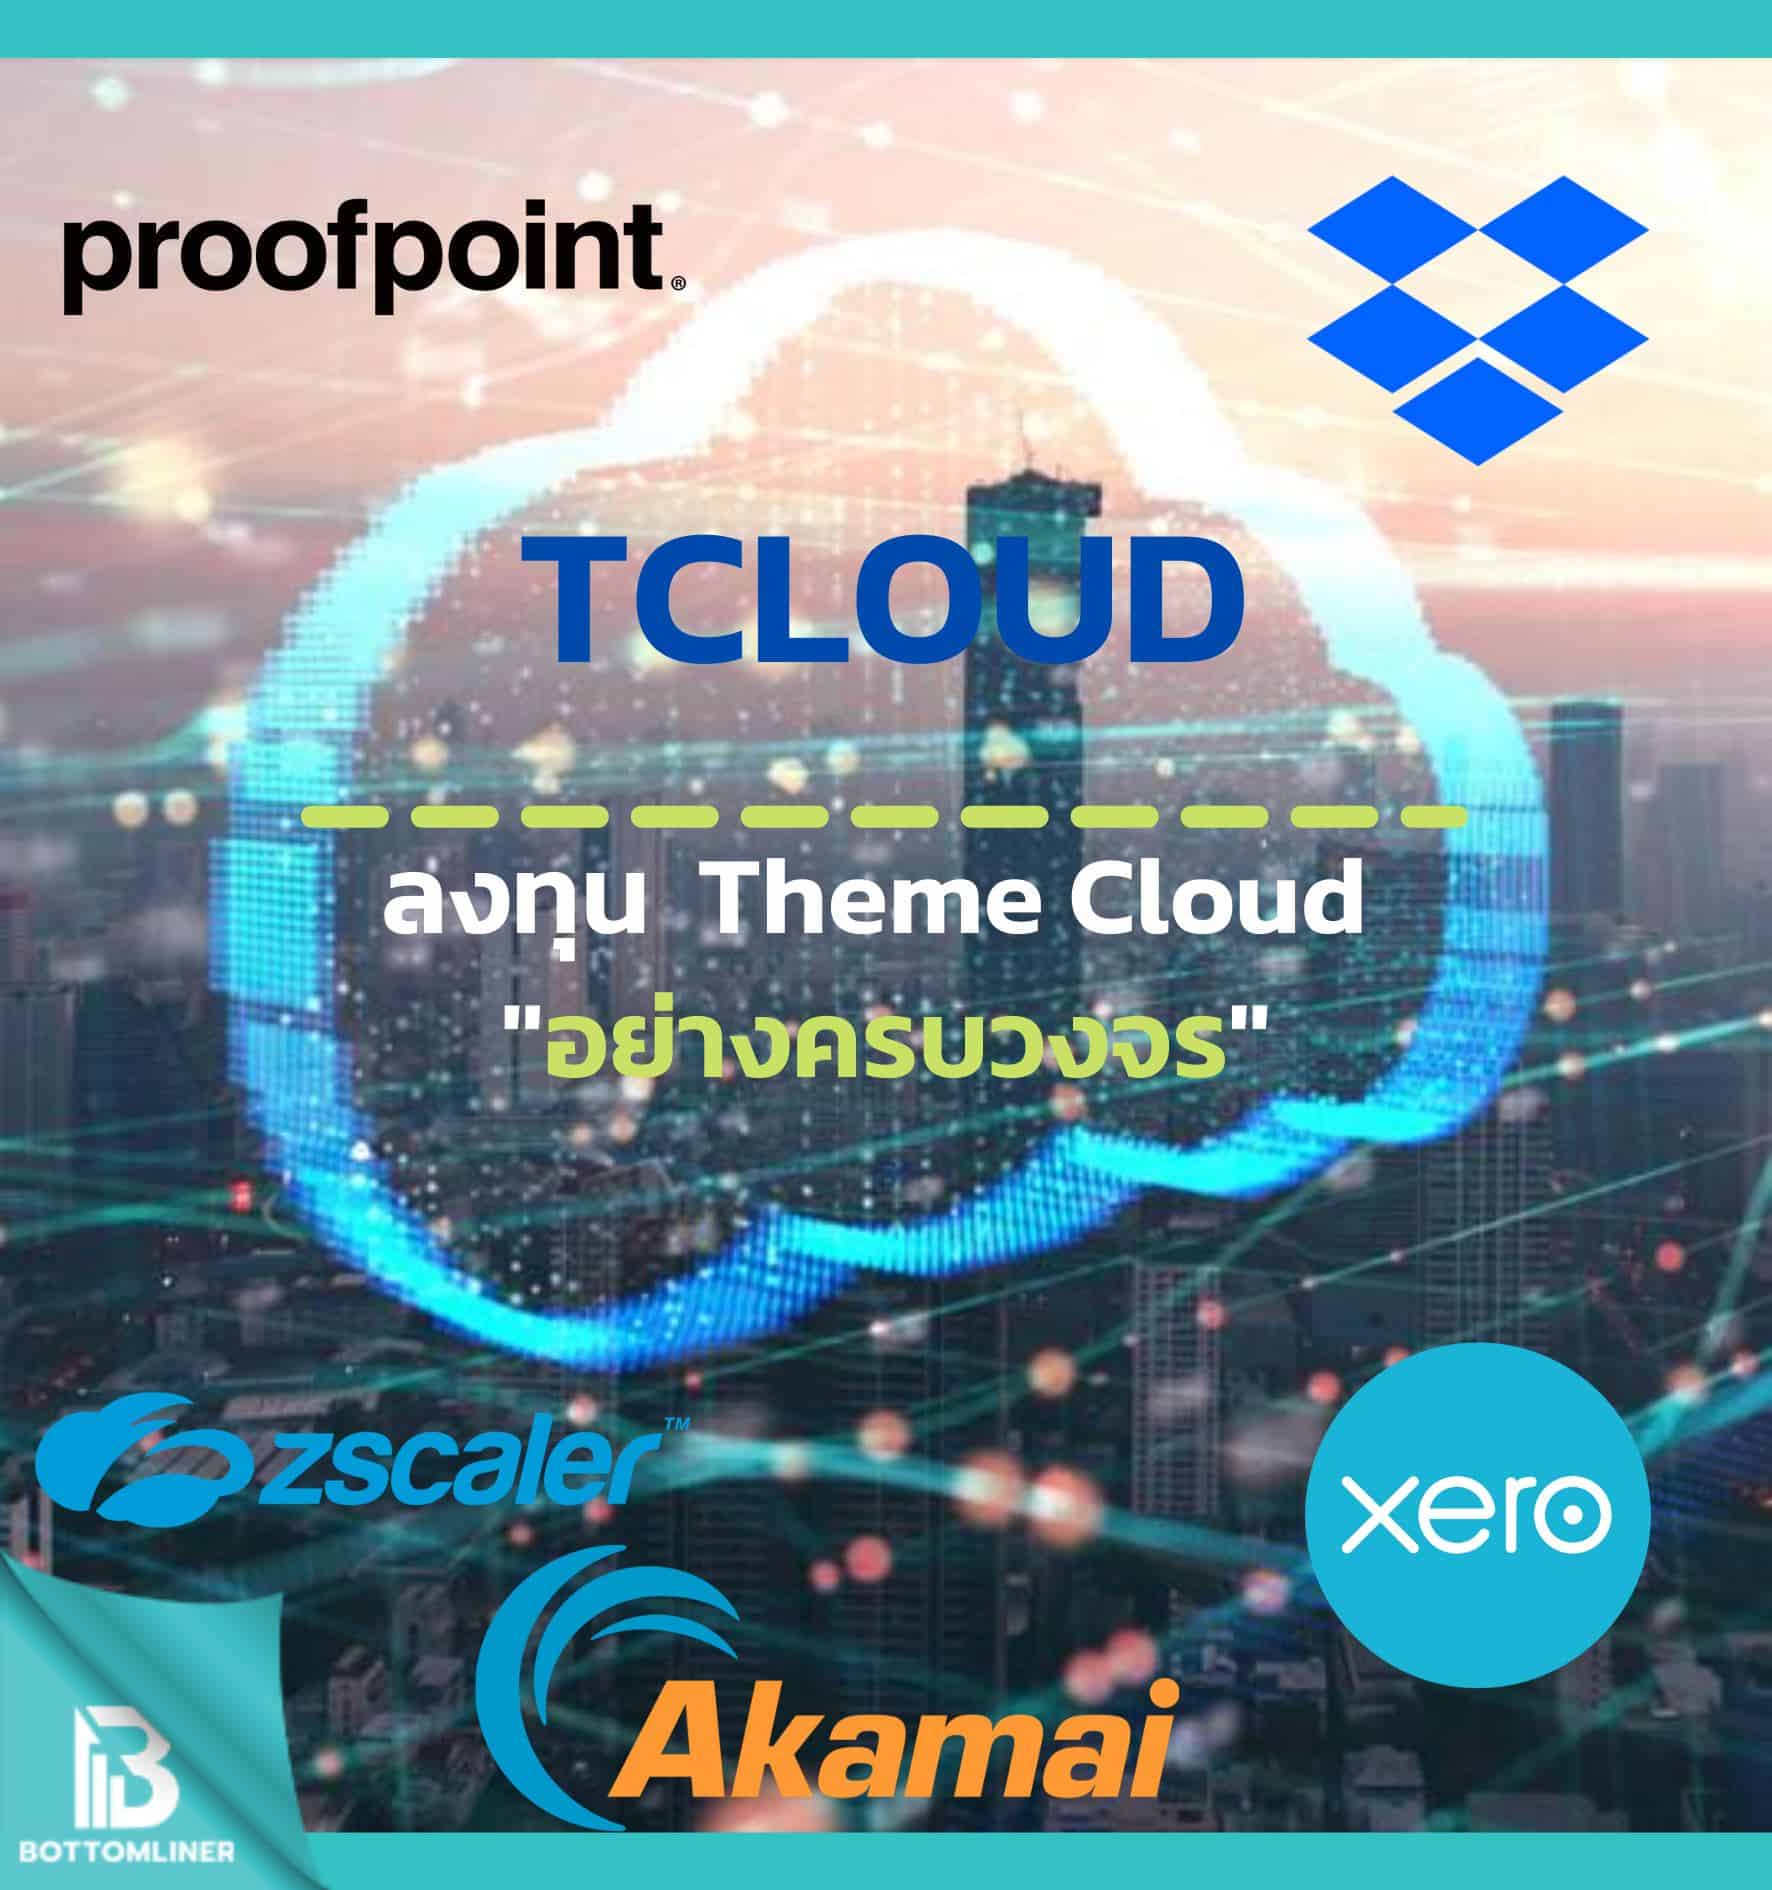 TCLOUD ลงทุน Theme Cloud Computing อย่างครบวงจร!!!